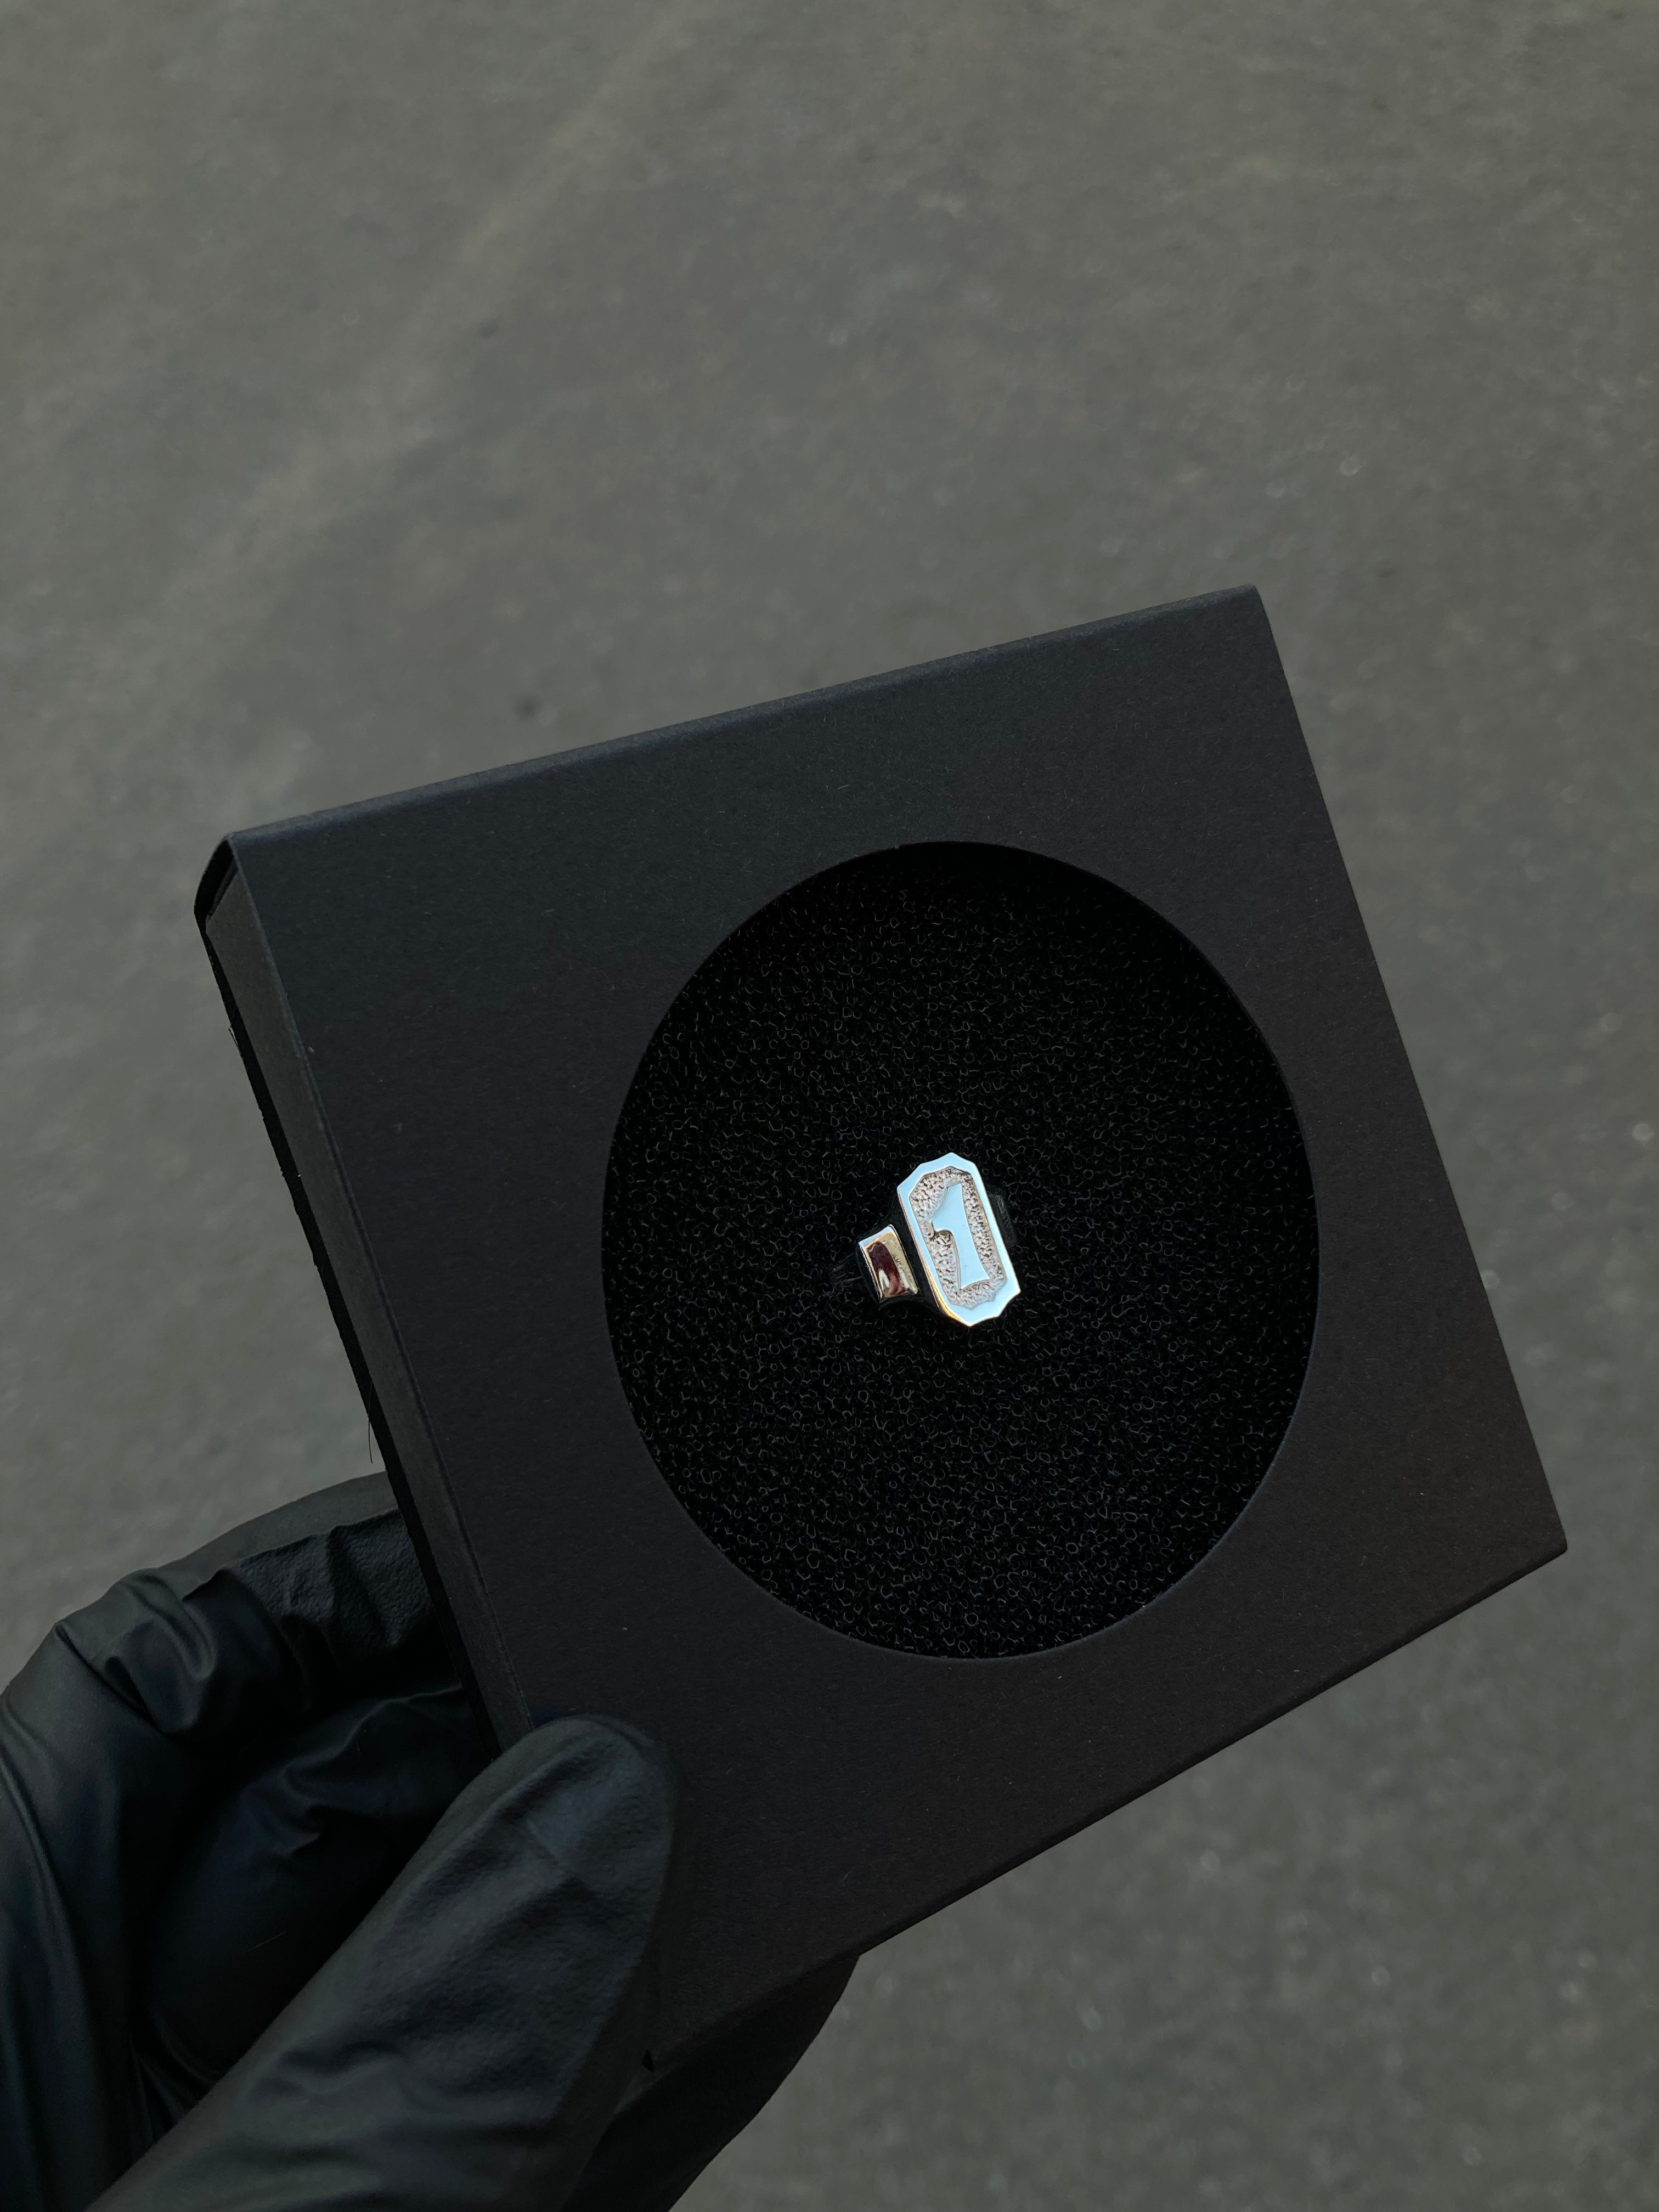 Prsten OS001 stříbro (925/1000) sklad